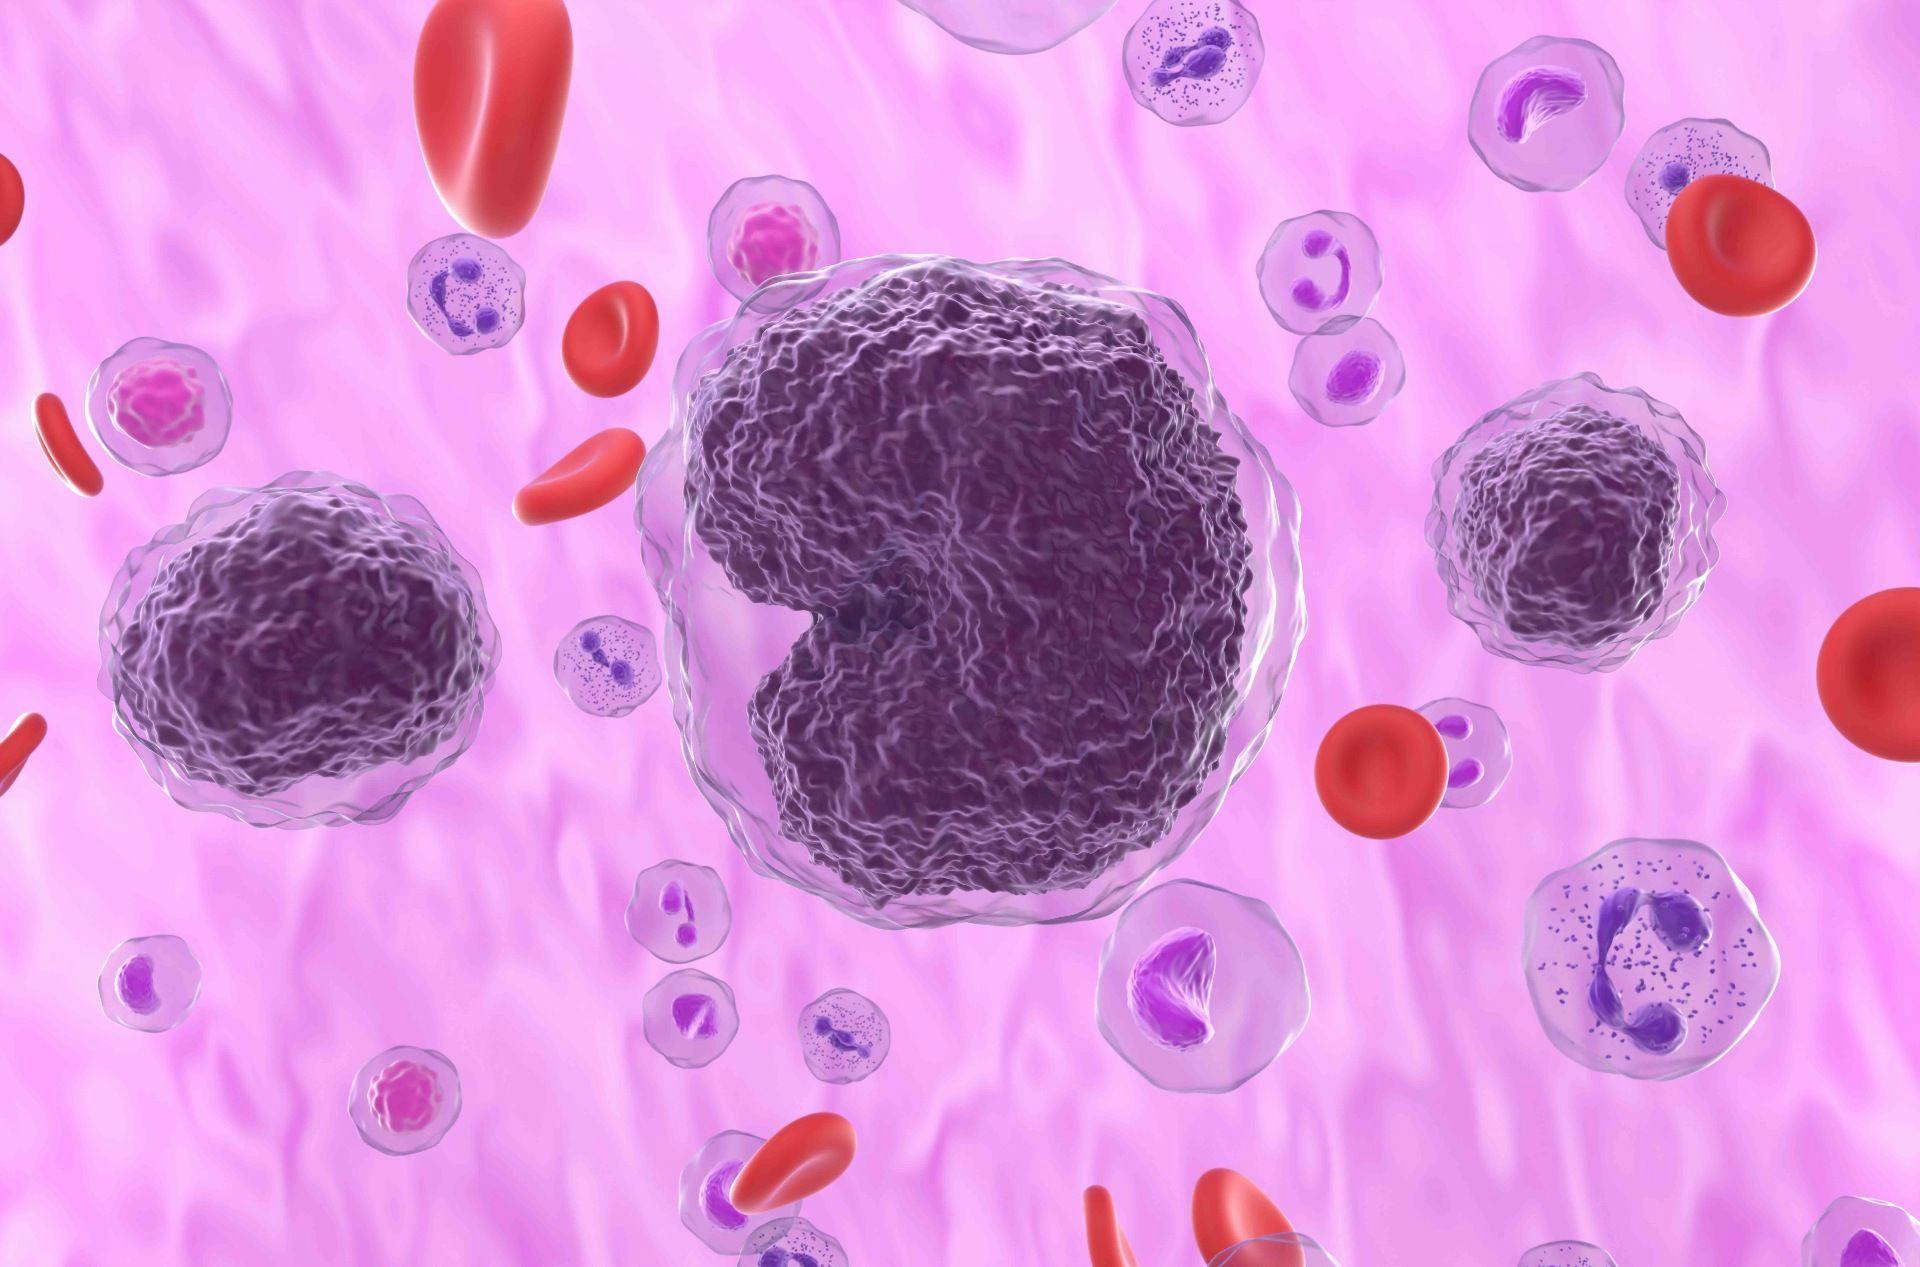 Lymphoma cells | Image credit: LASZLO - stock.adobe.com